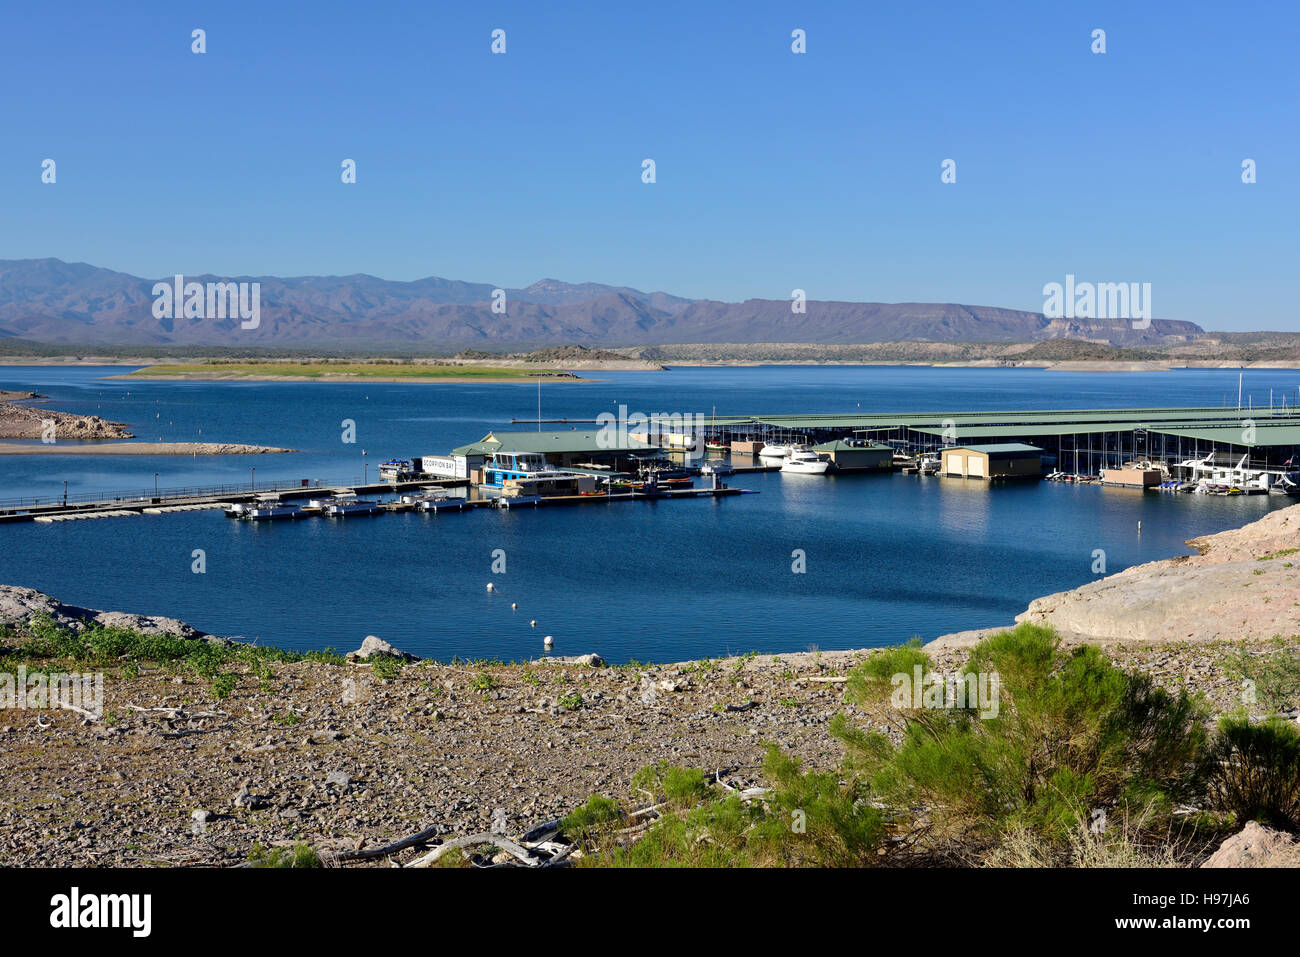 Scorpion Bay Marina, Pleasant Lake, Sonoran Desert, Arizona, USA. The lake provides drinking water to Phoenix along with recreational facilities. Stock Photo